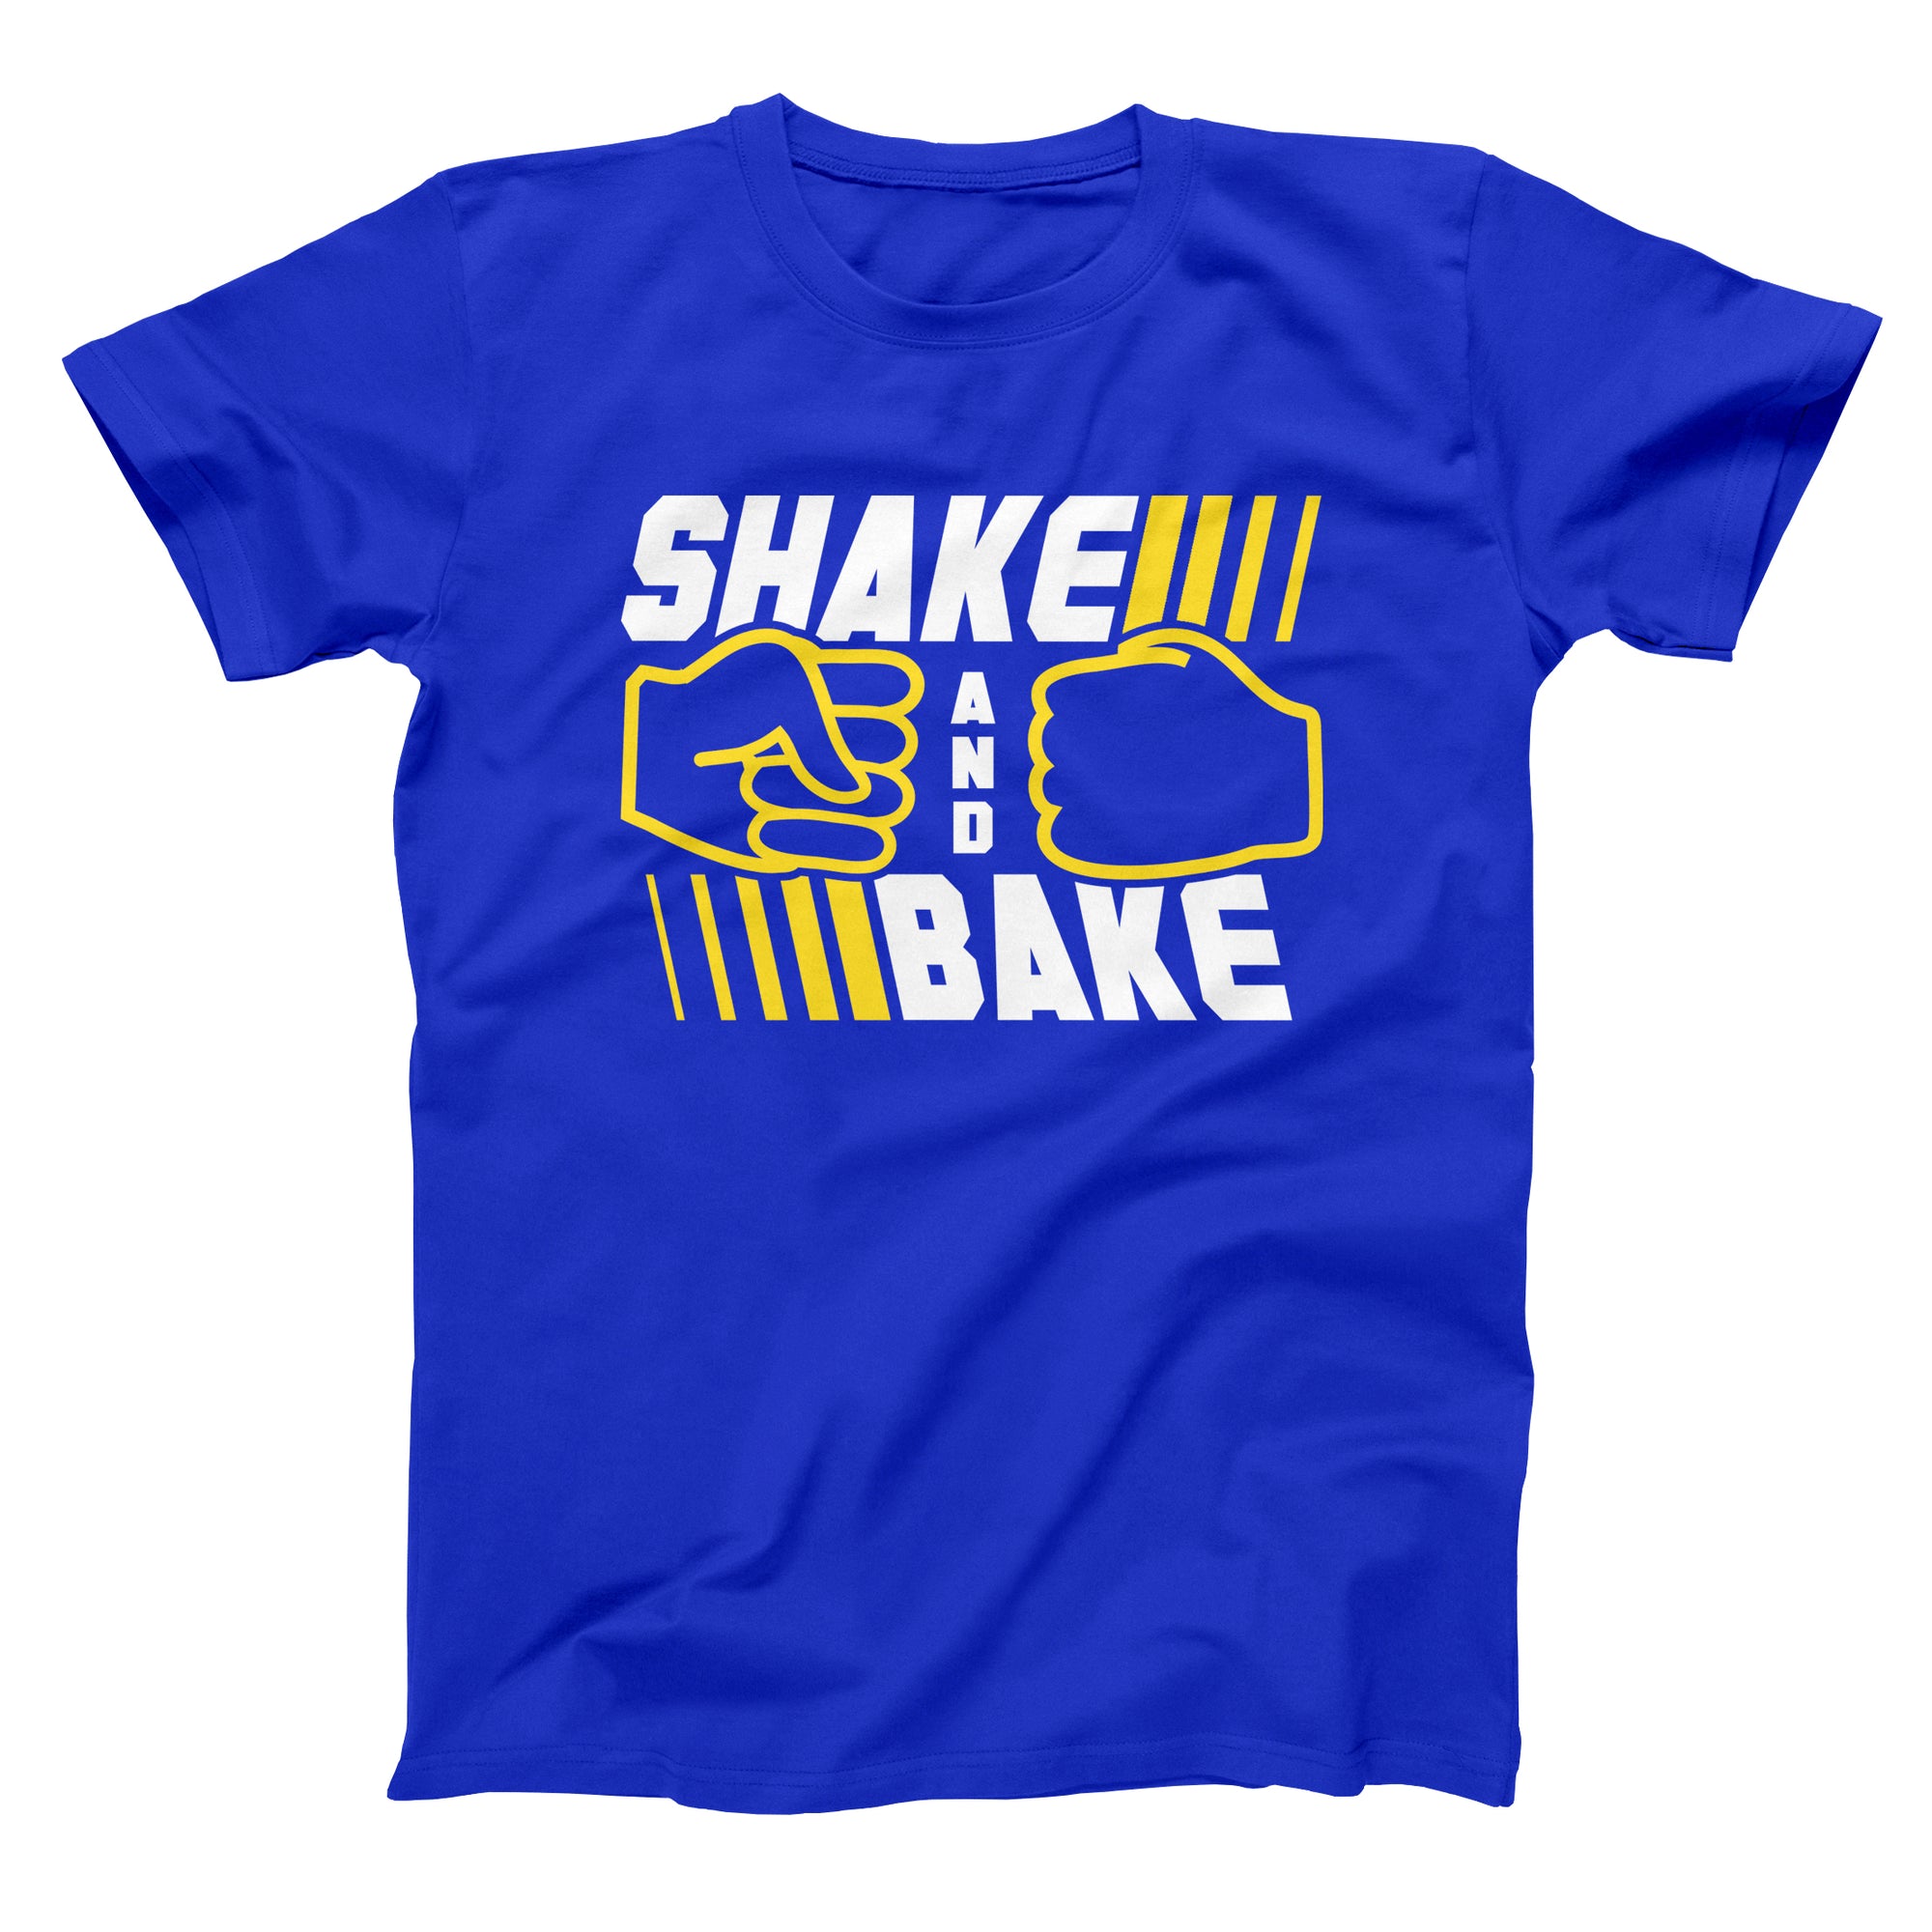 Shake And Bake Tshirt - Donkey Tees